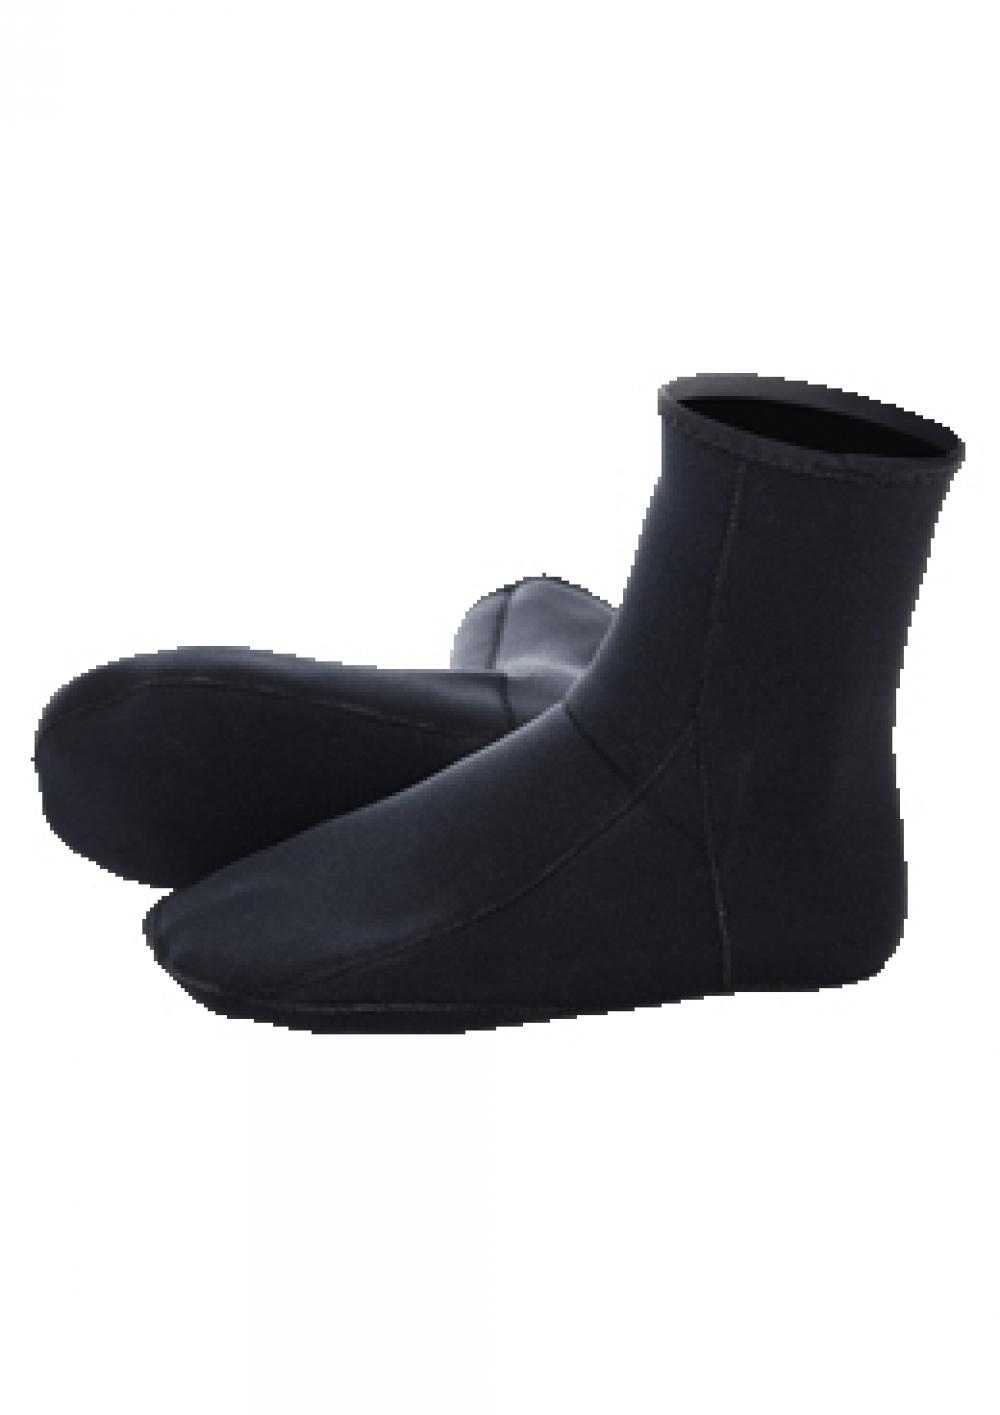 BARE Neo Sock For Sale Online in Canada - Dan's Dive Shop